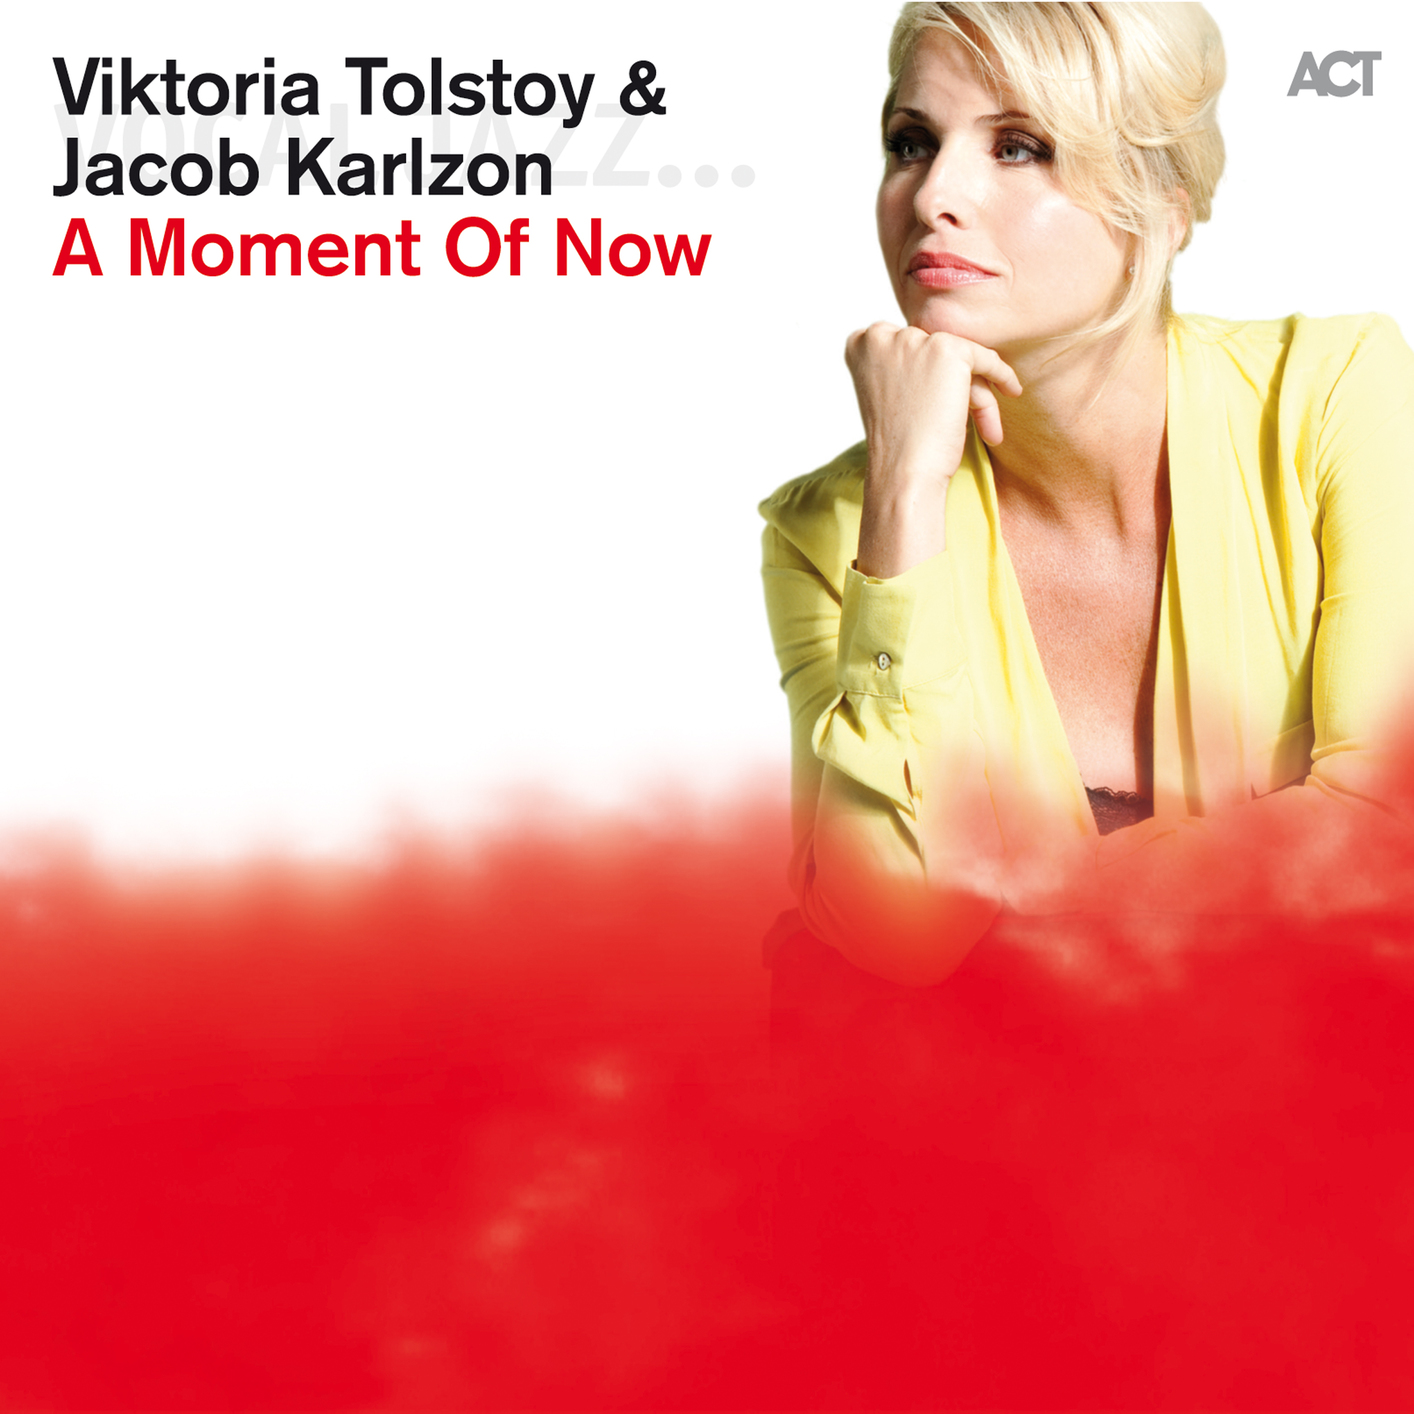 Viktoria Tolstoy & Jacob Karlzon – A Moment Of Now (2013) [HighResAudio FLAC 24bit/96kHz]